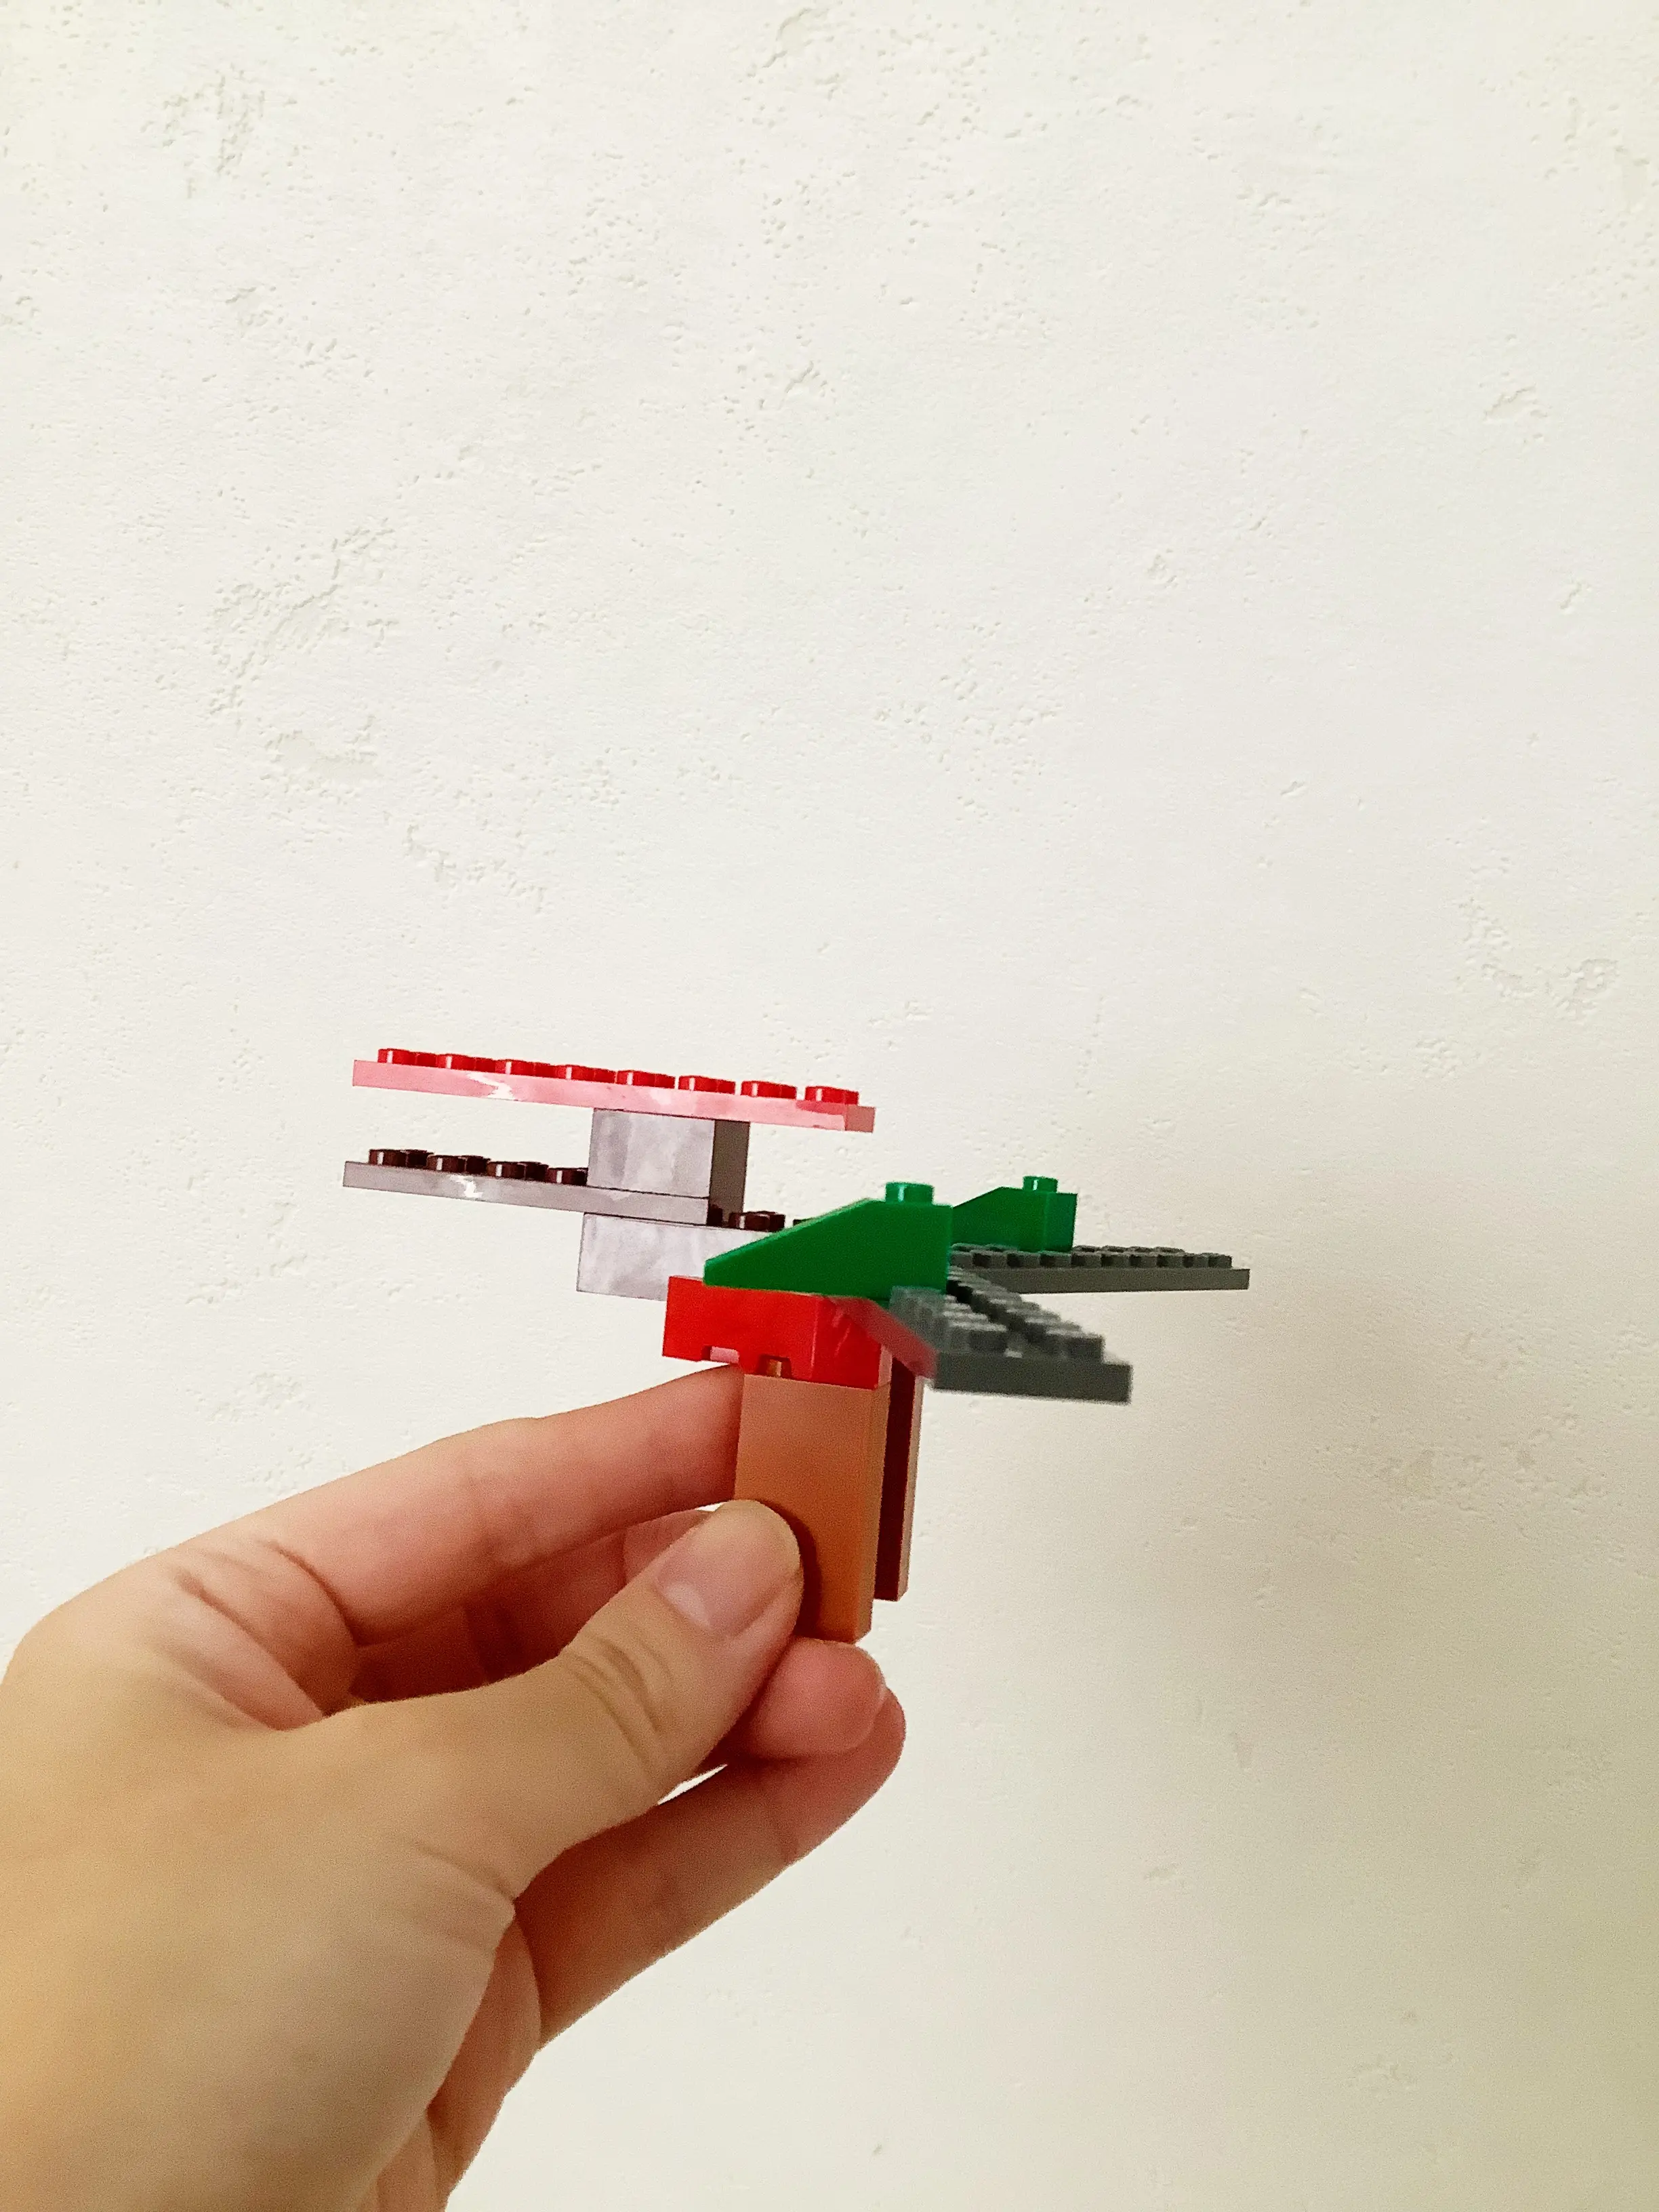 LEGOで作ったプテラノドン